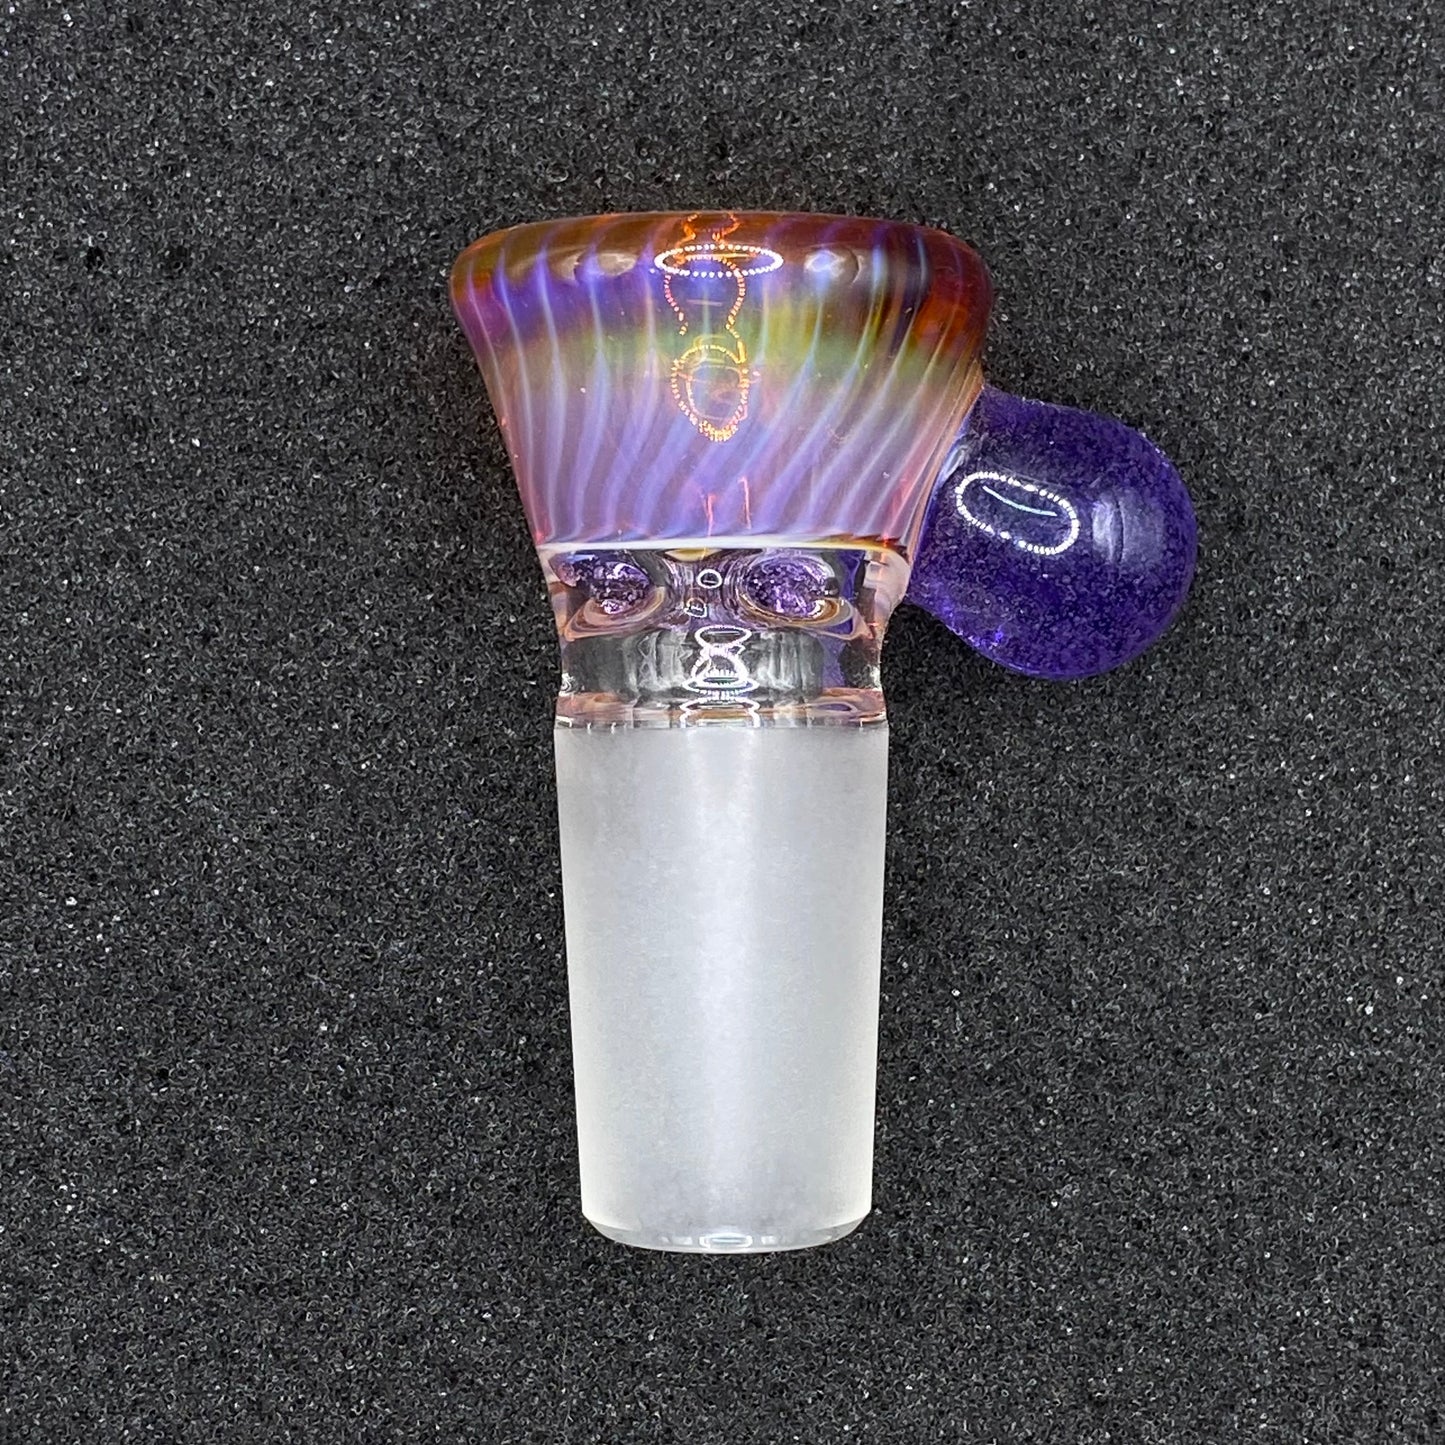 Brian Sheridan - 18mm 3-Hole Glass Bowl Slide -  Lokis Lipstick / Purple Lollipop